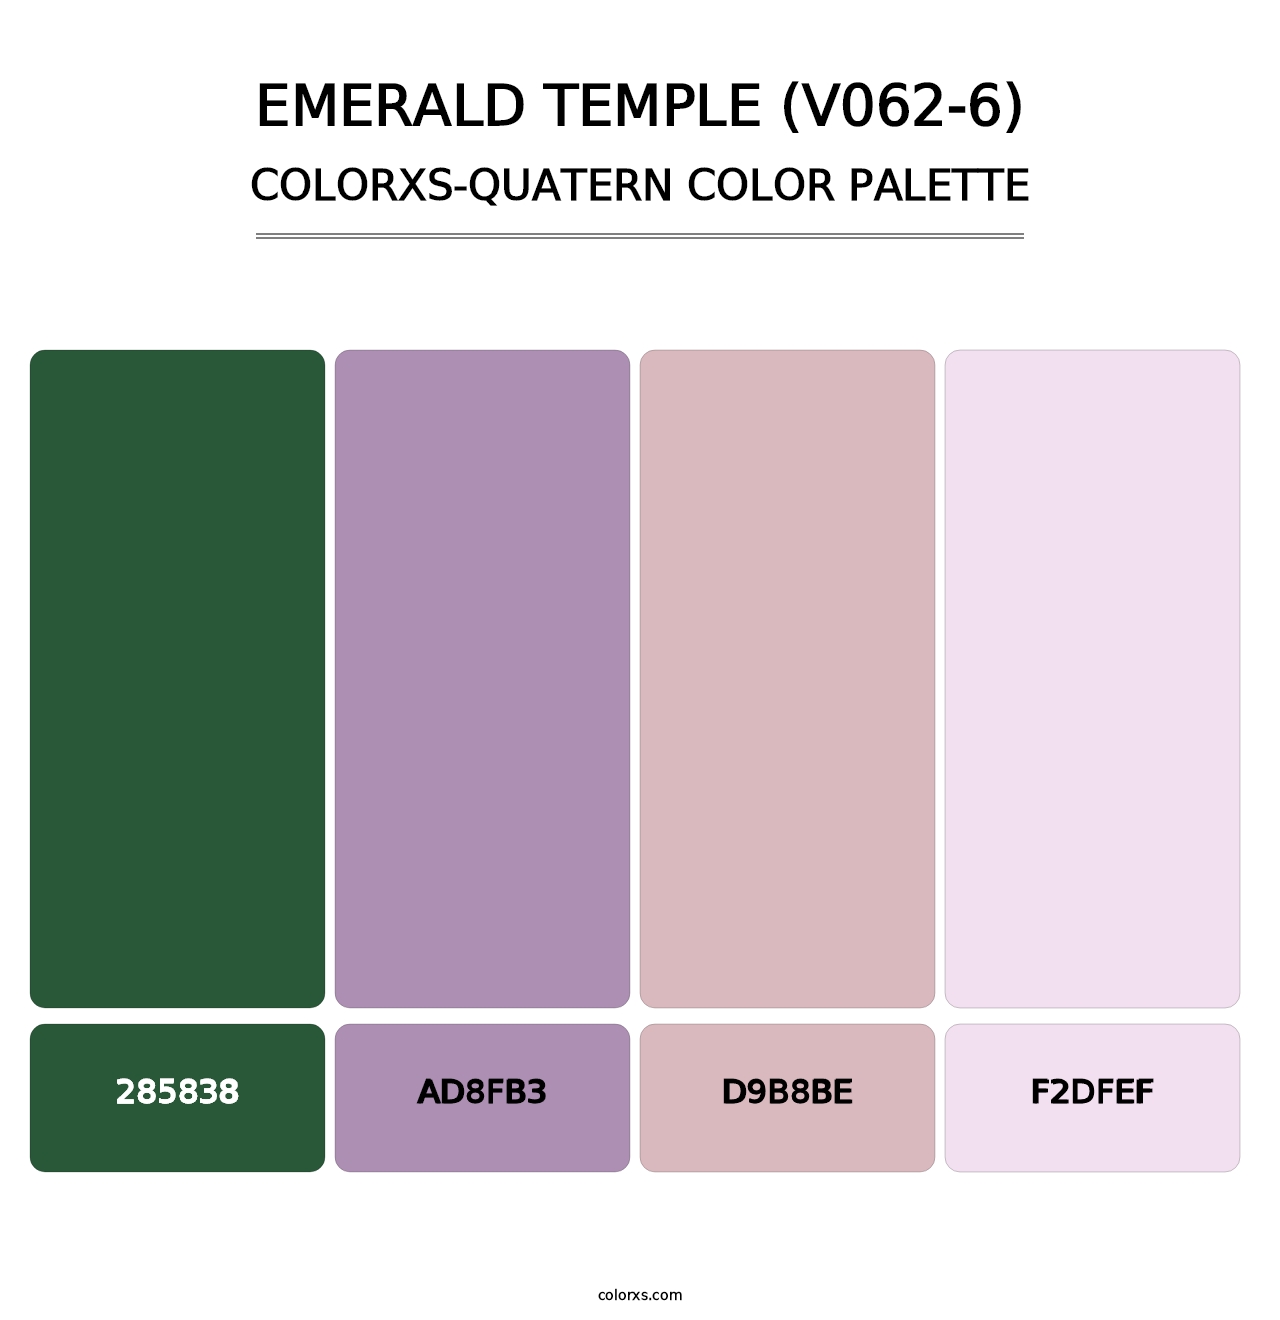 Emerald Temple (V062-6) - Colorxs Quatern Palette